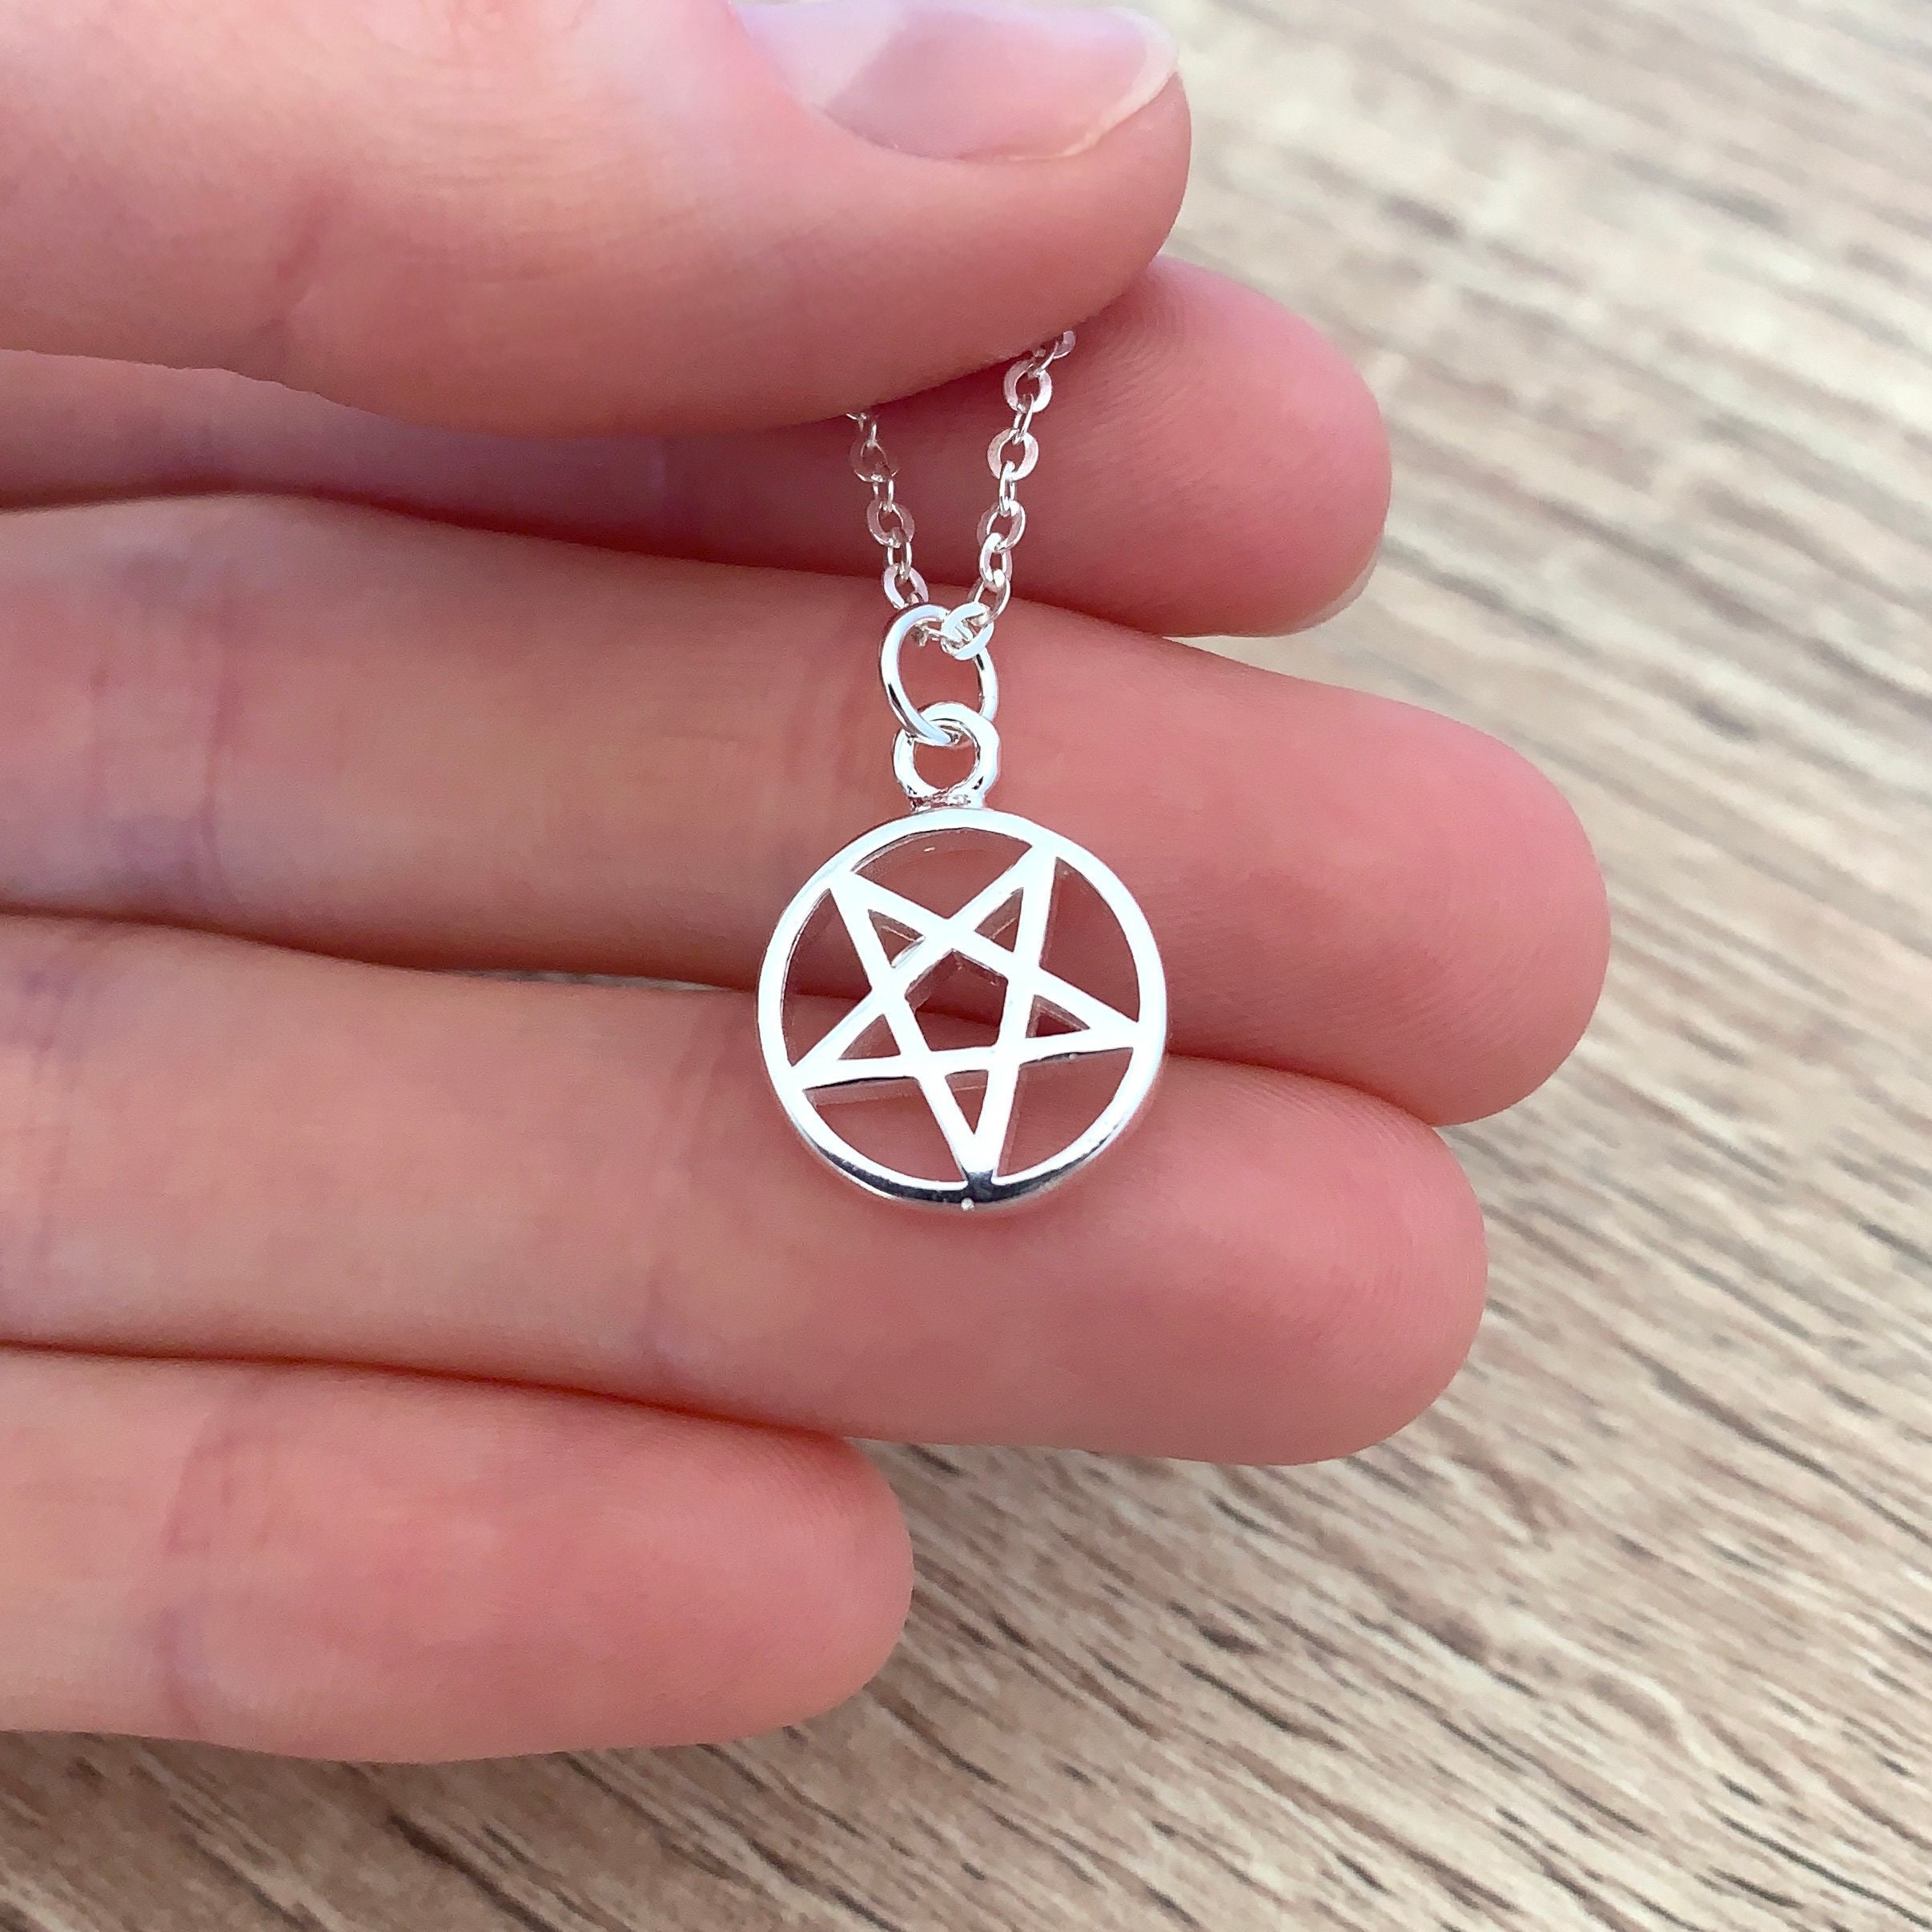 925 sterling silver wicca inverted pentagram pendant necklace A16 | eBay